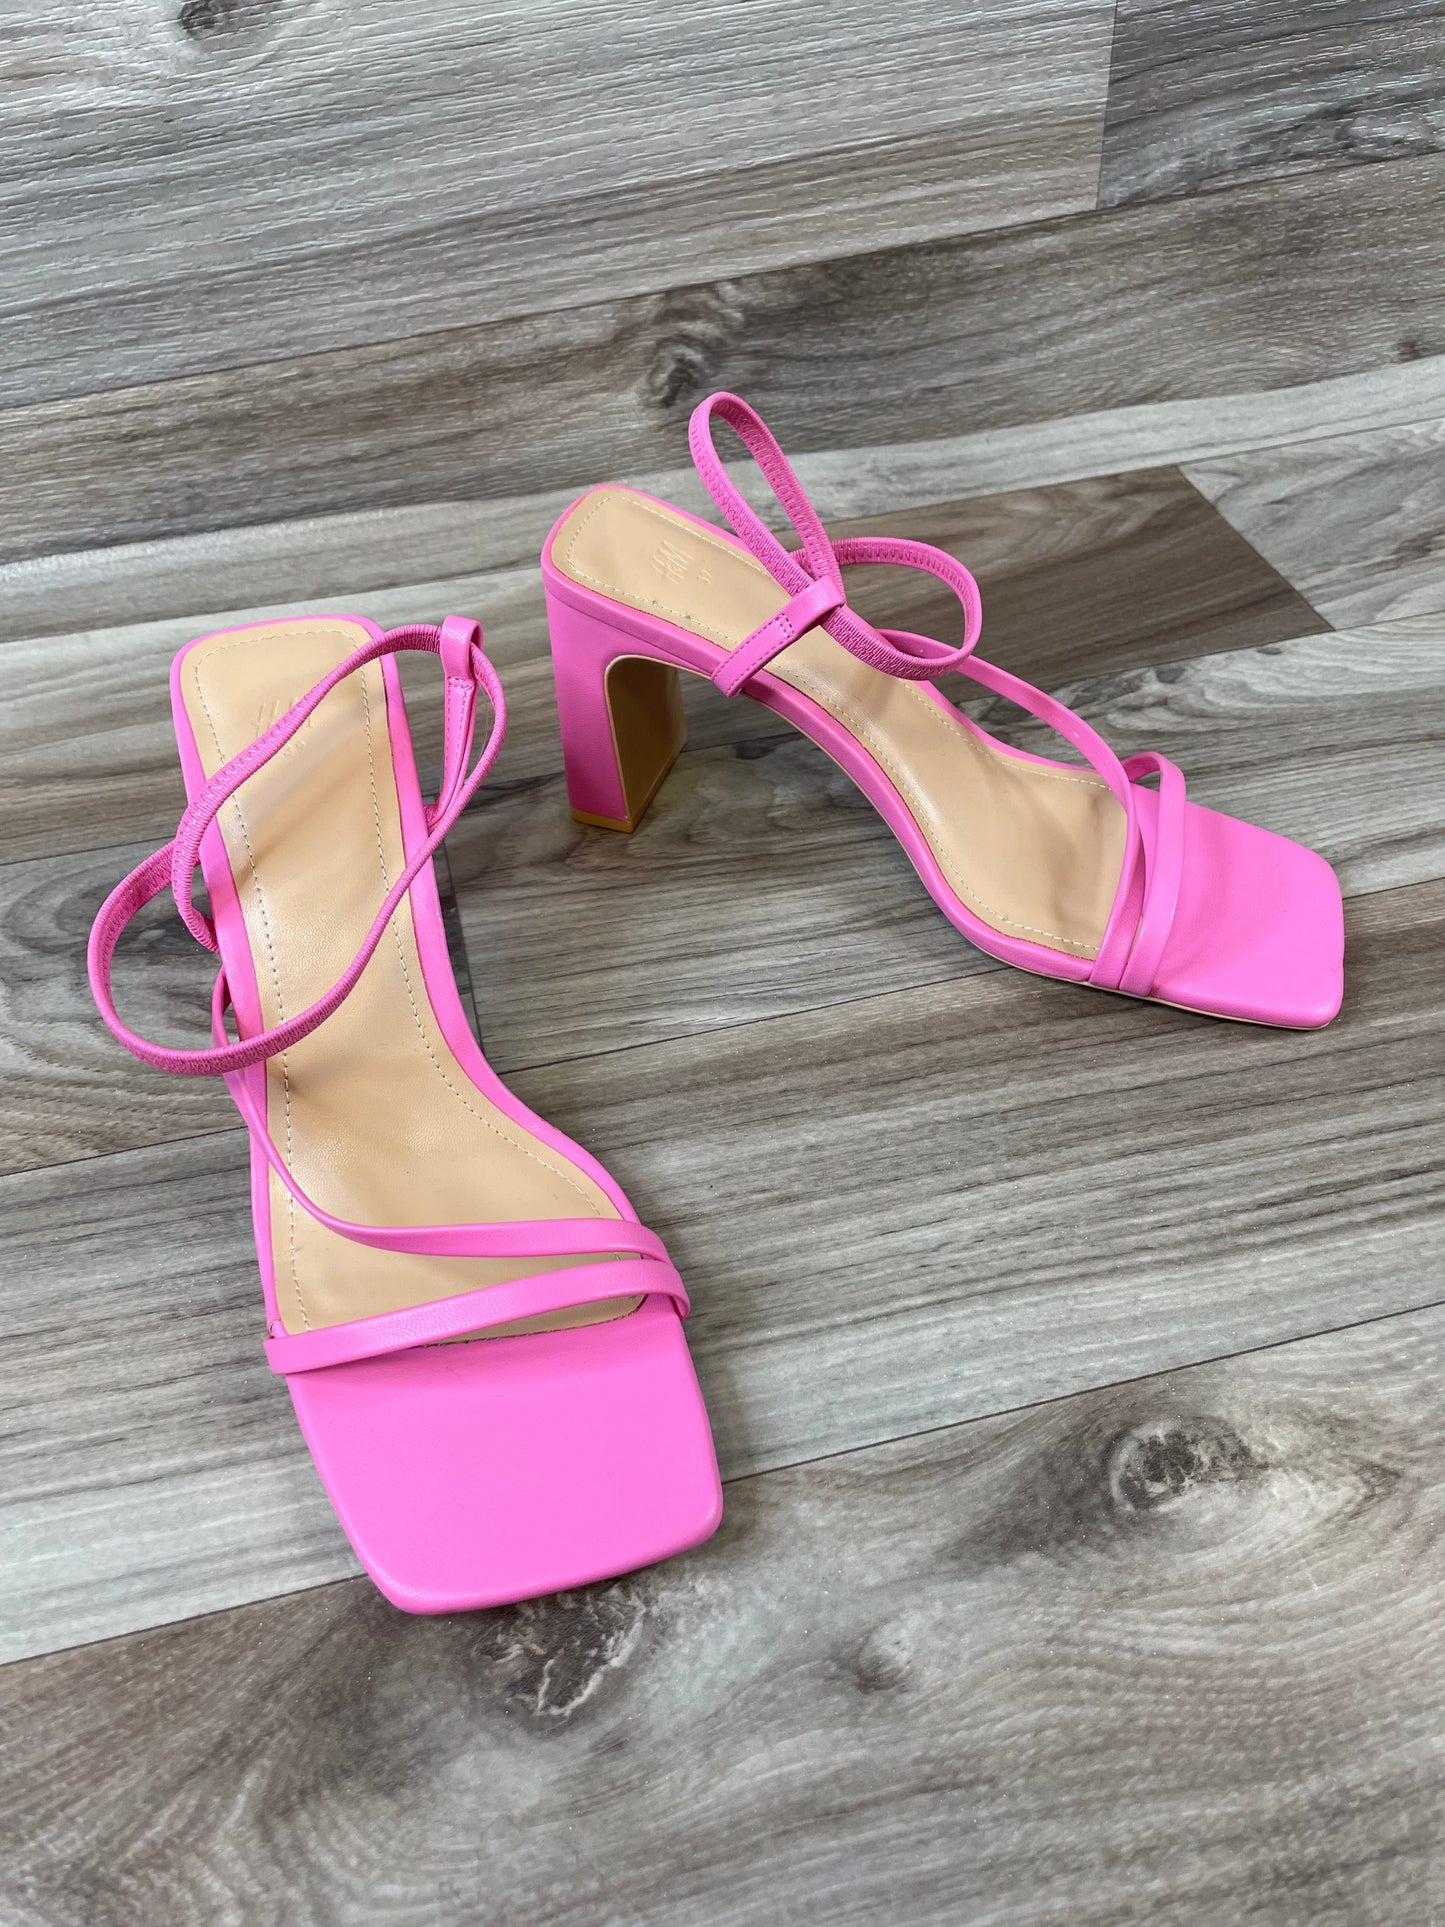 Pink Sandals Heels Block H&m, Size 8.5